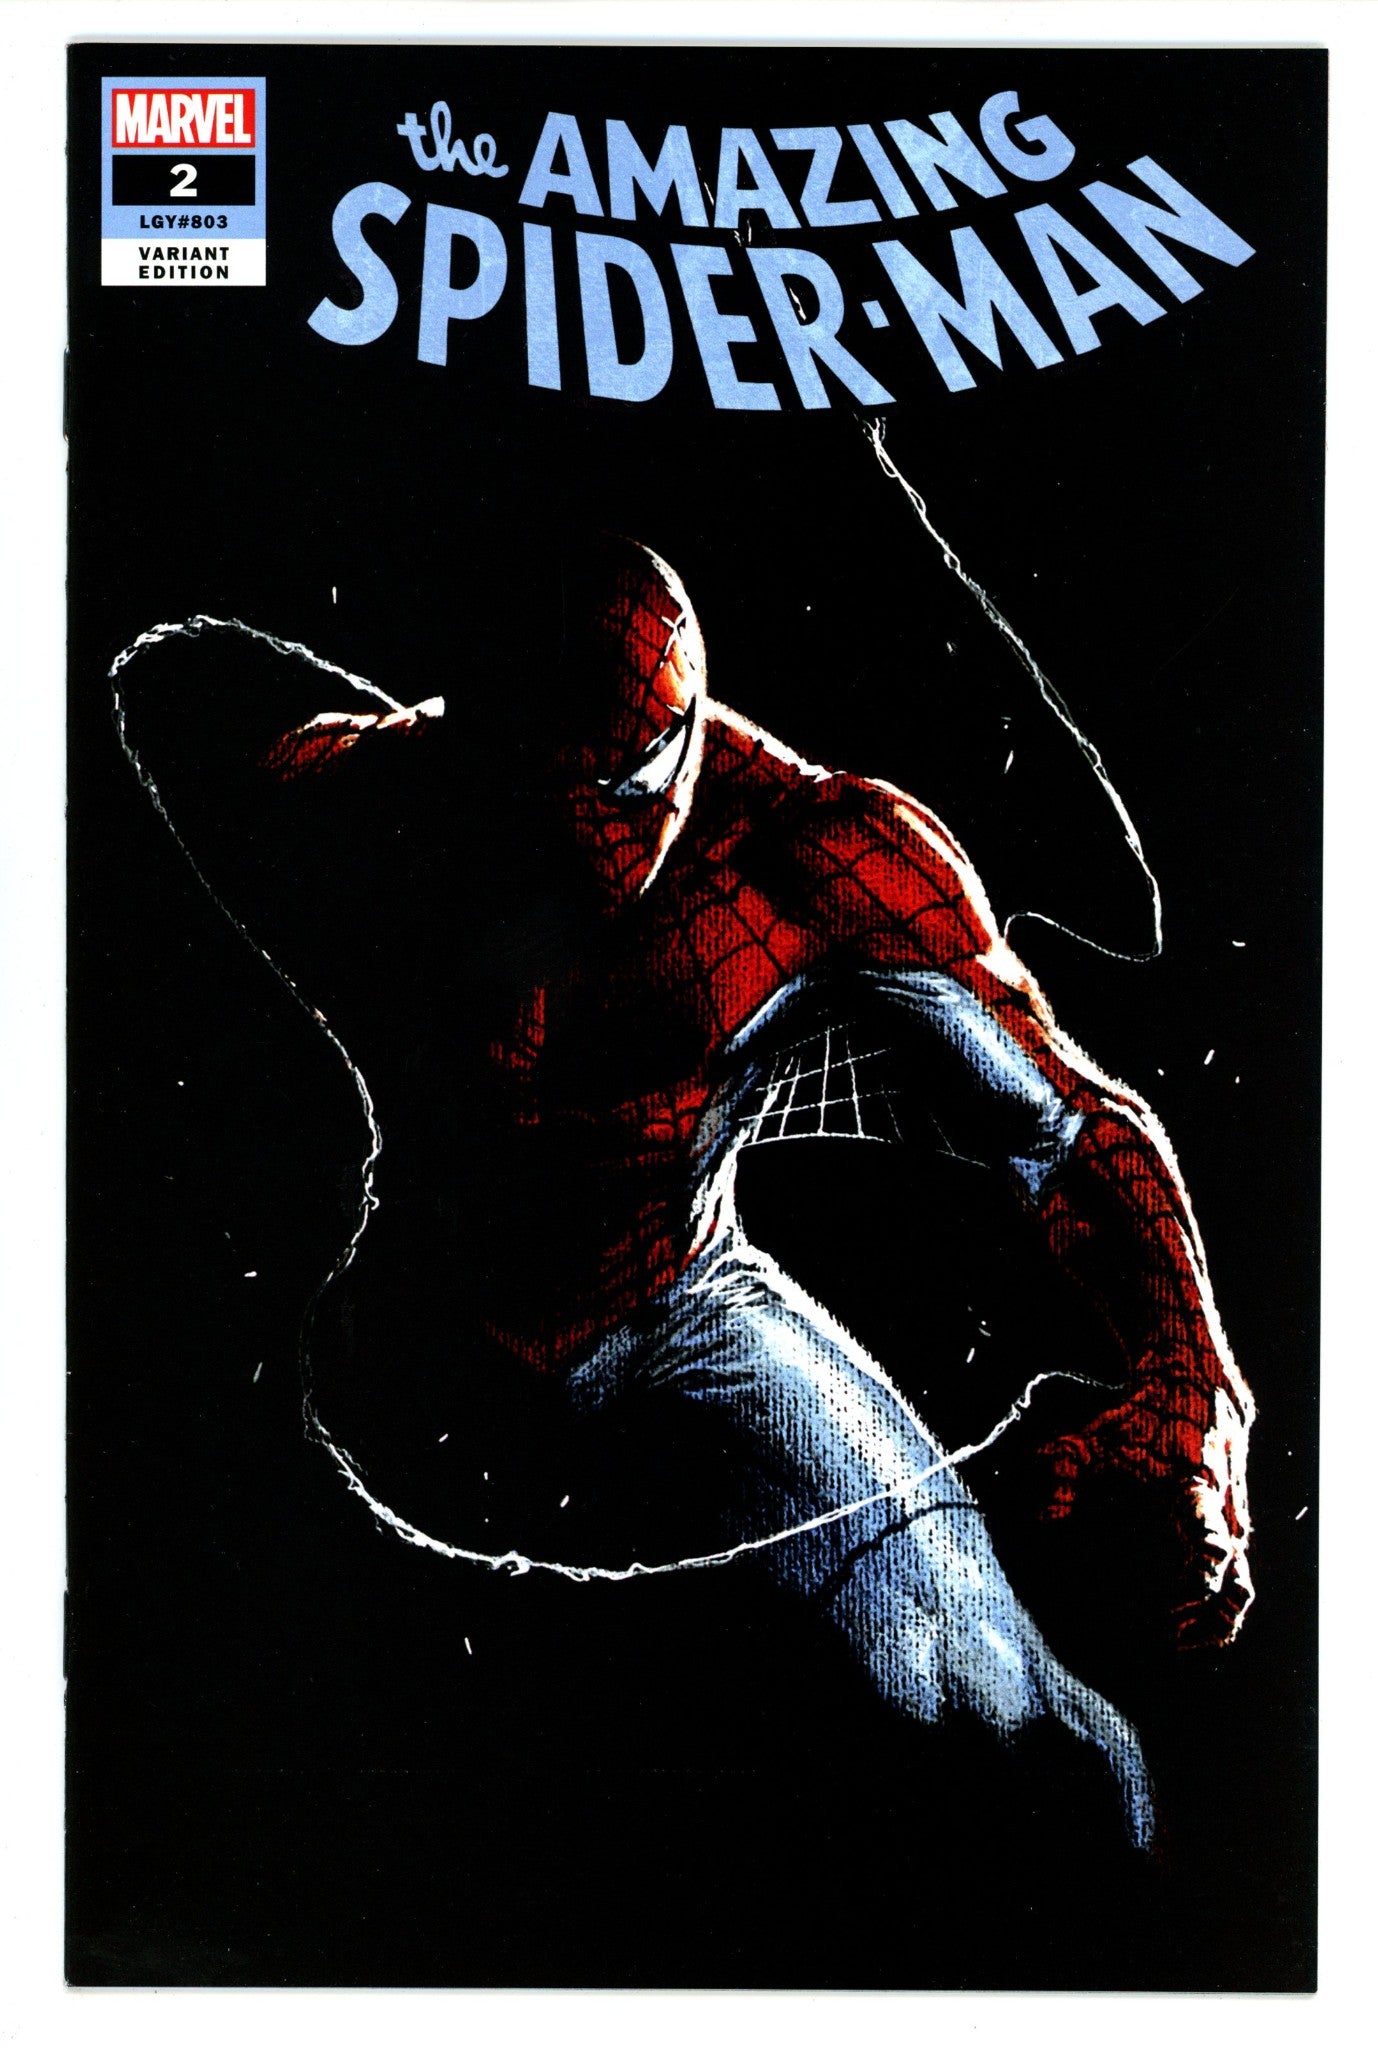 Amazing Spider-Man Vol 5 2 VF/NM (9.0) (2015) Dell'Otto Exclusive Variant 